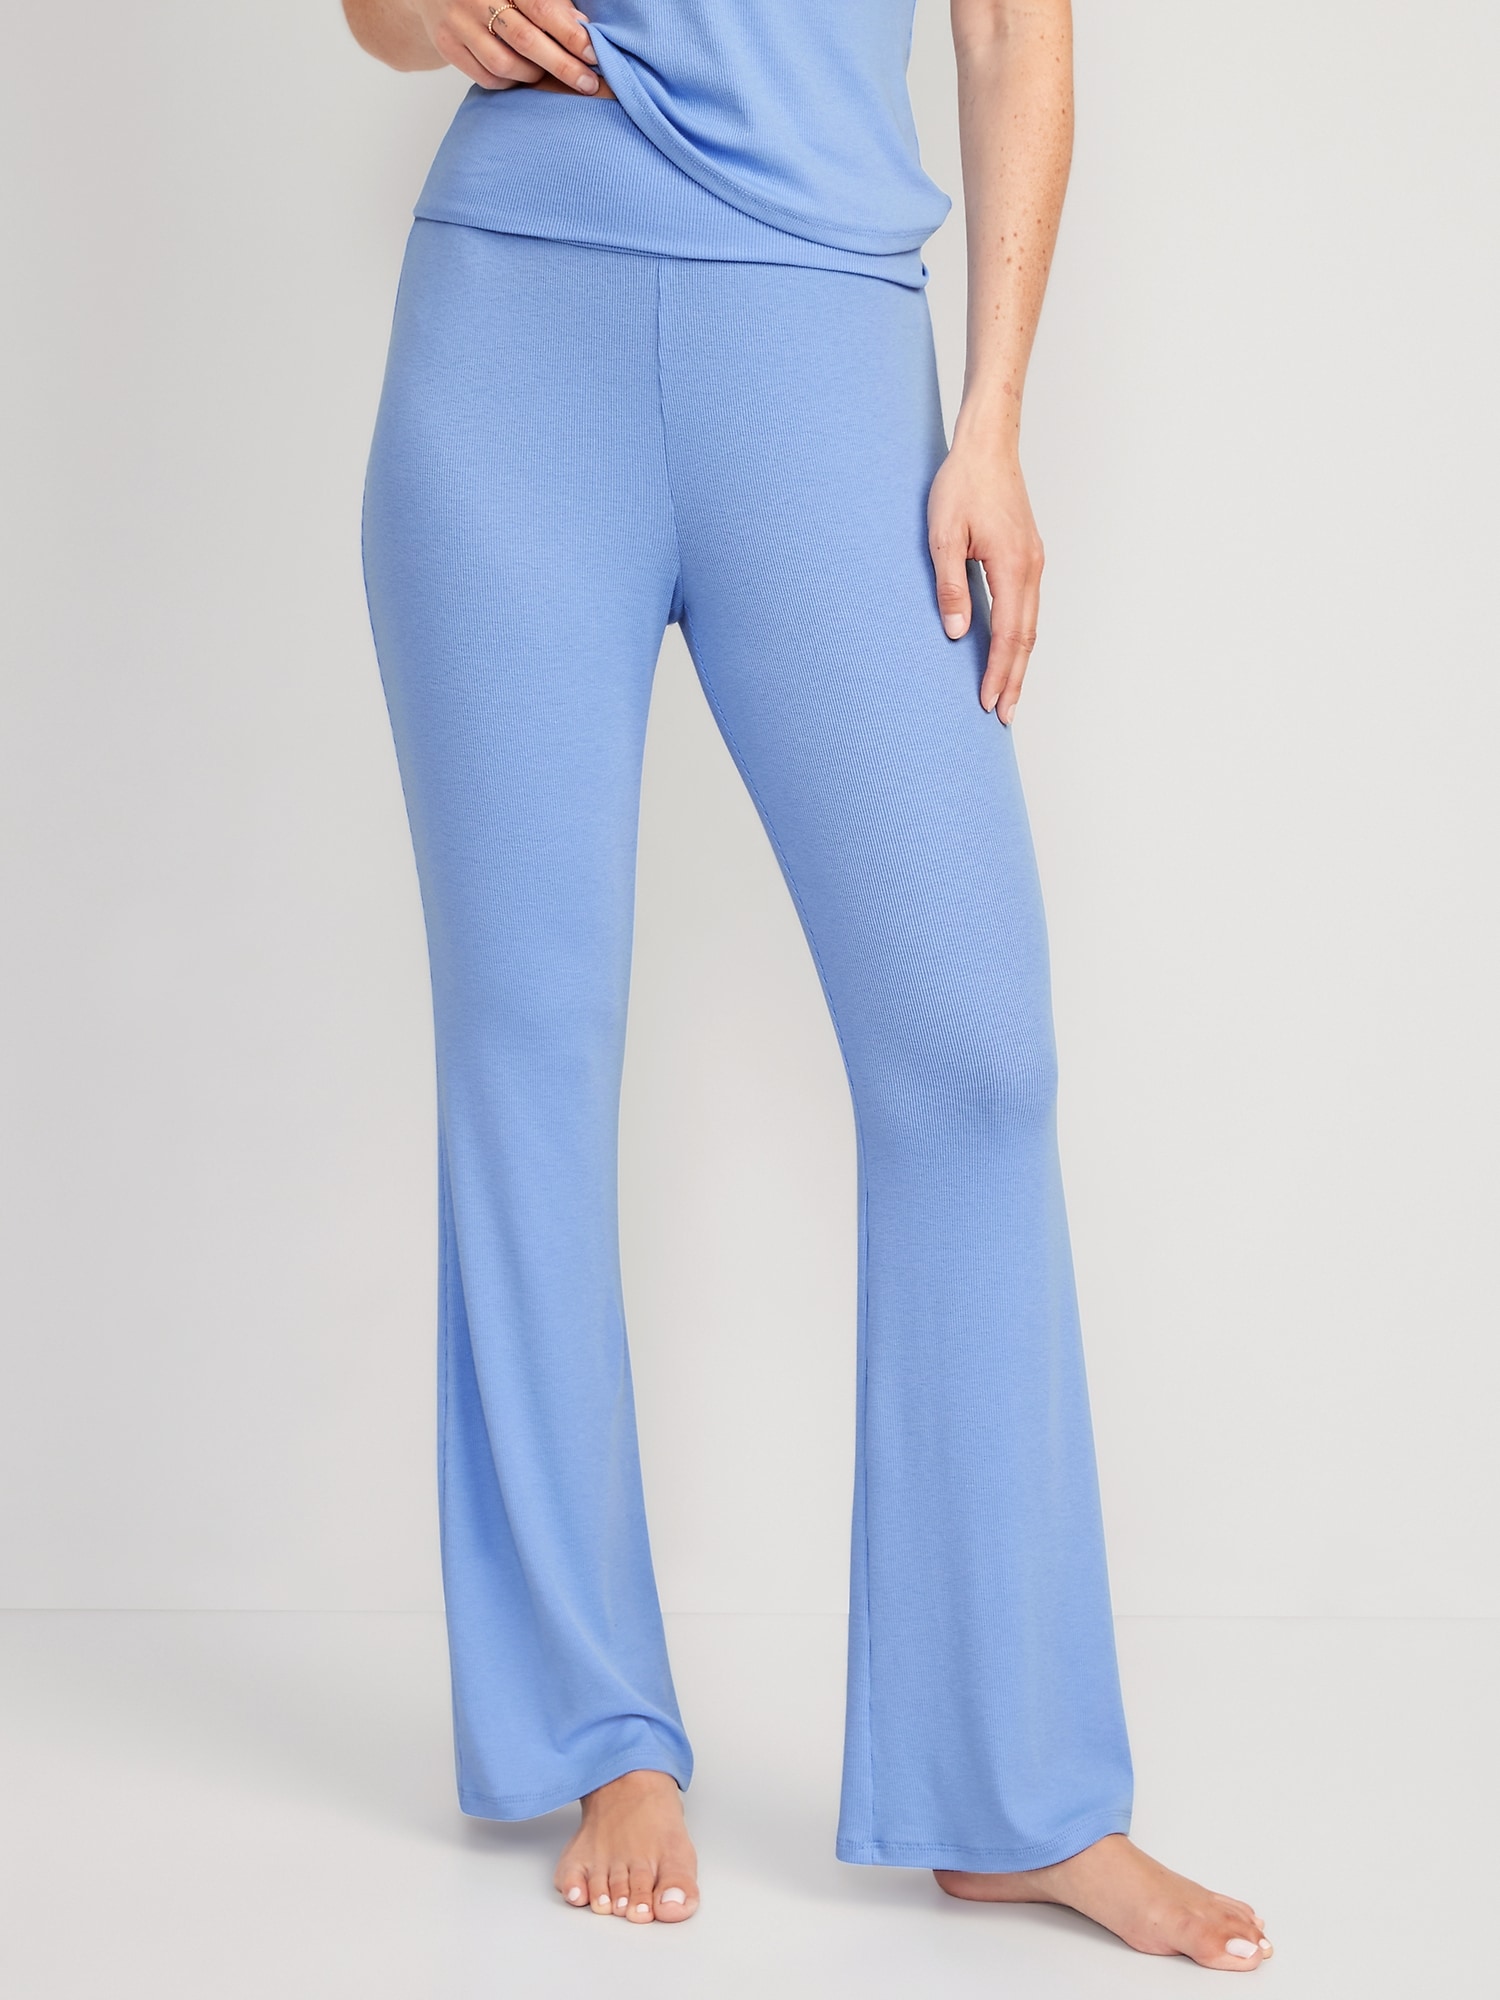 Old Navy - Mid-Rise UltraLite Foldover-Waist Flare Lounge Pants for Women  blue